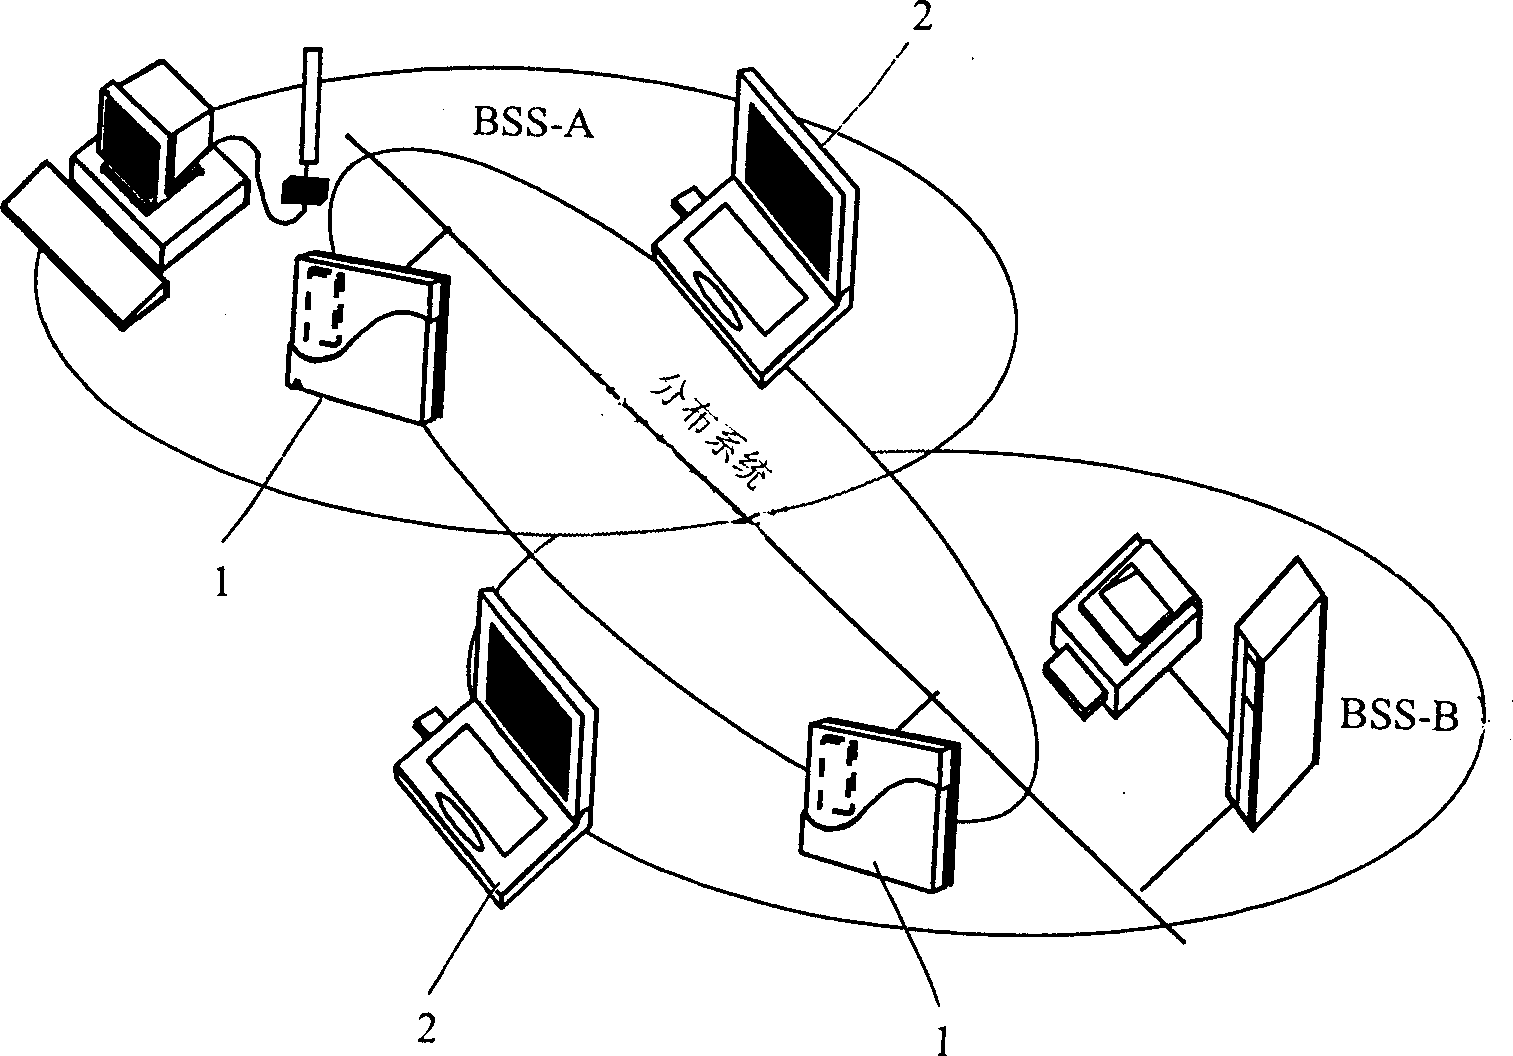 Method of isolating user in radio local network